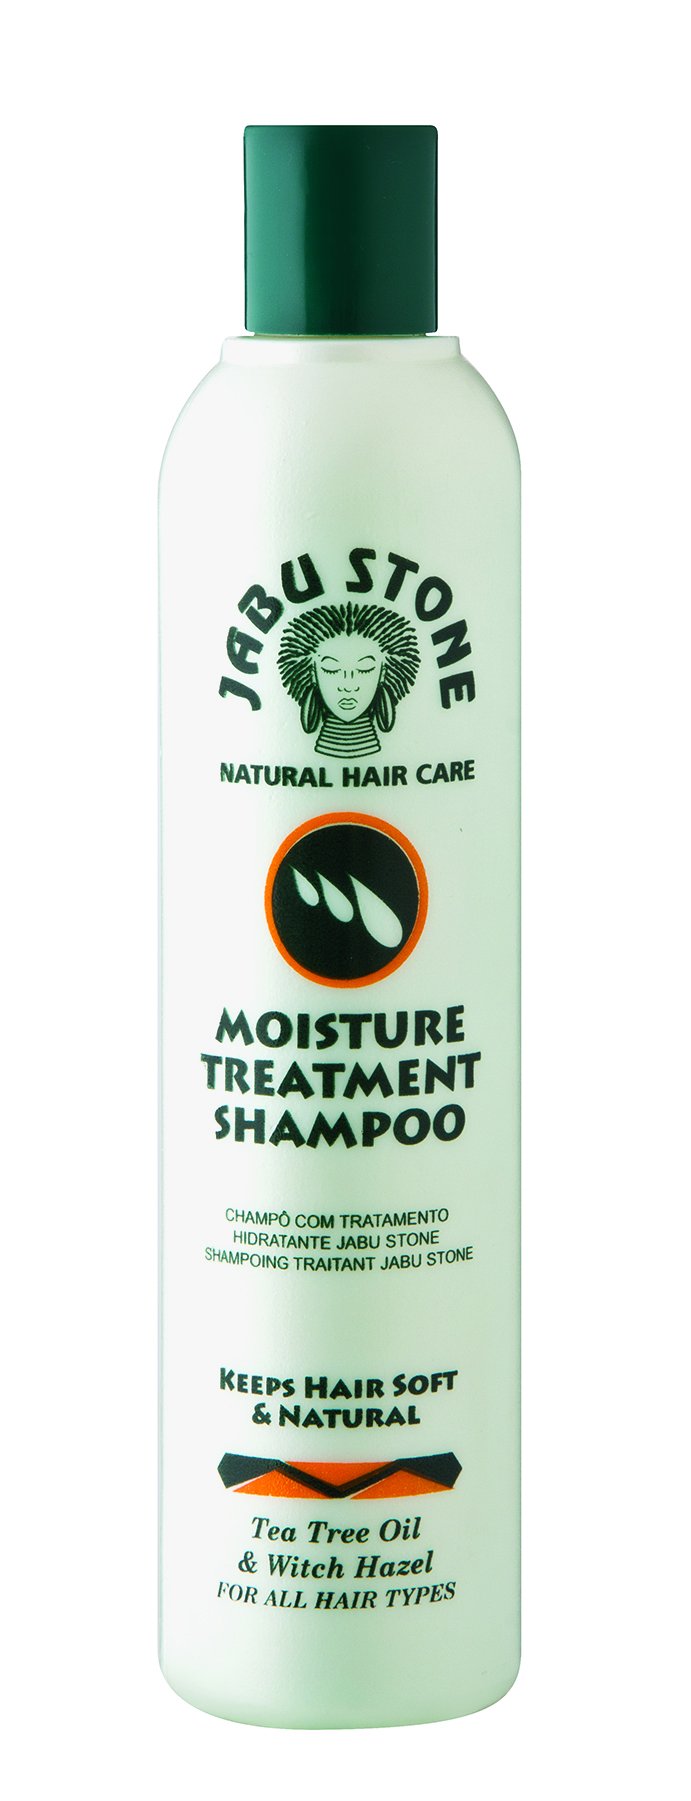 Jabu Stone Treatment Shampoo 250ml